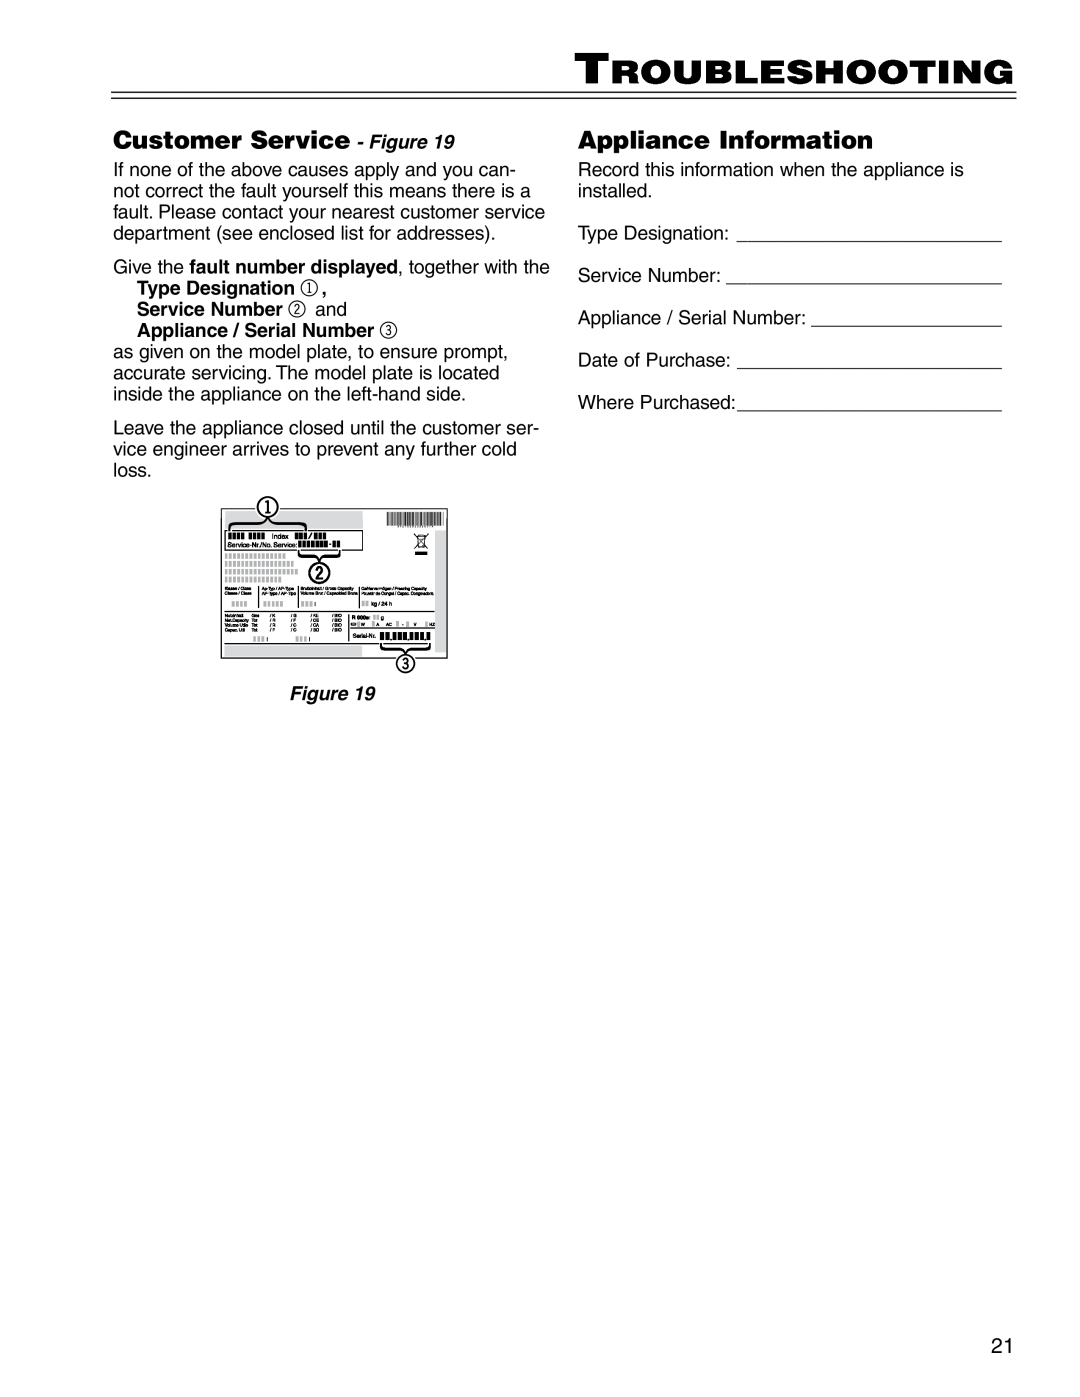 Liebherr CS 1400 7082 663-00 manual Customer Service - Figure, Appliance Information, Troubleshooting 